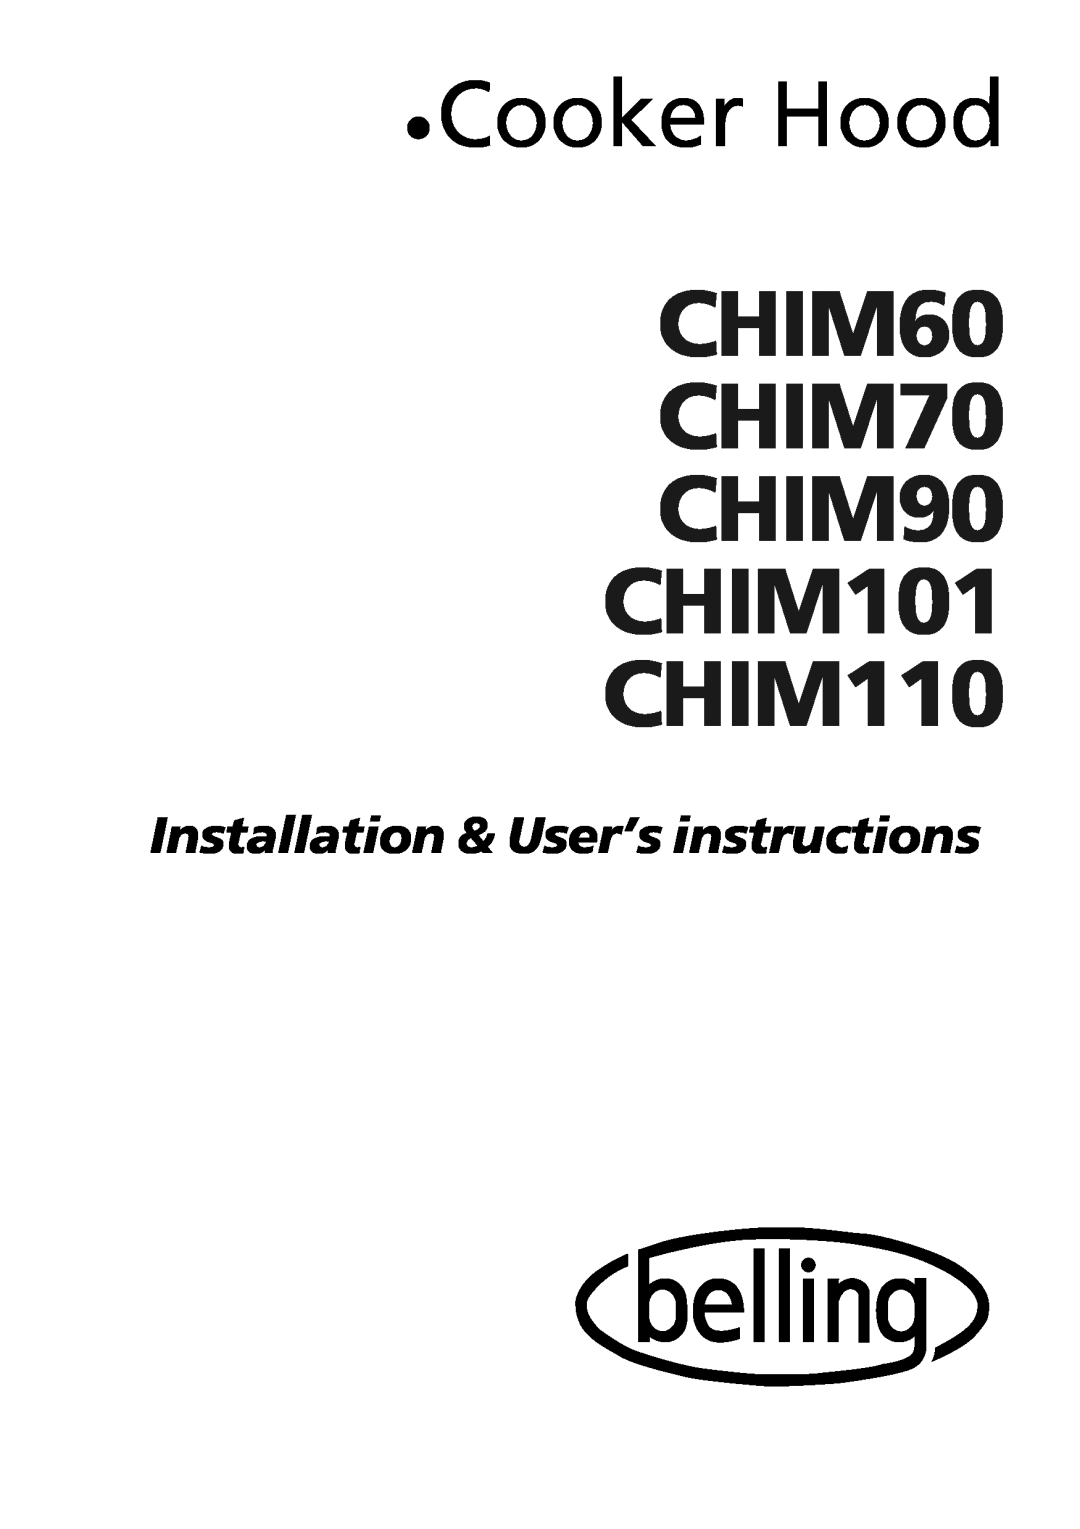 Glen Dimplex Home Appliances Ltd CHIM119 manual Cooker Hood, CHIM60 CHIM70 CHIM90 CHIM101 CHIM110 